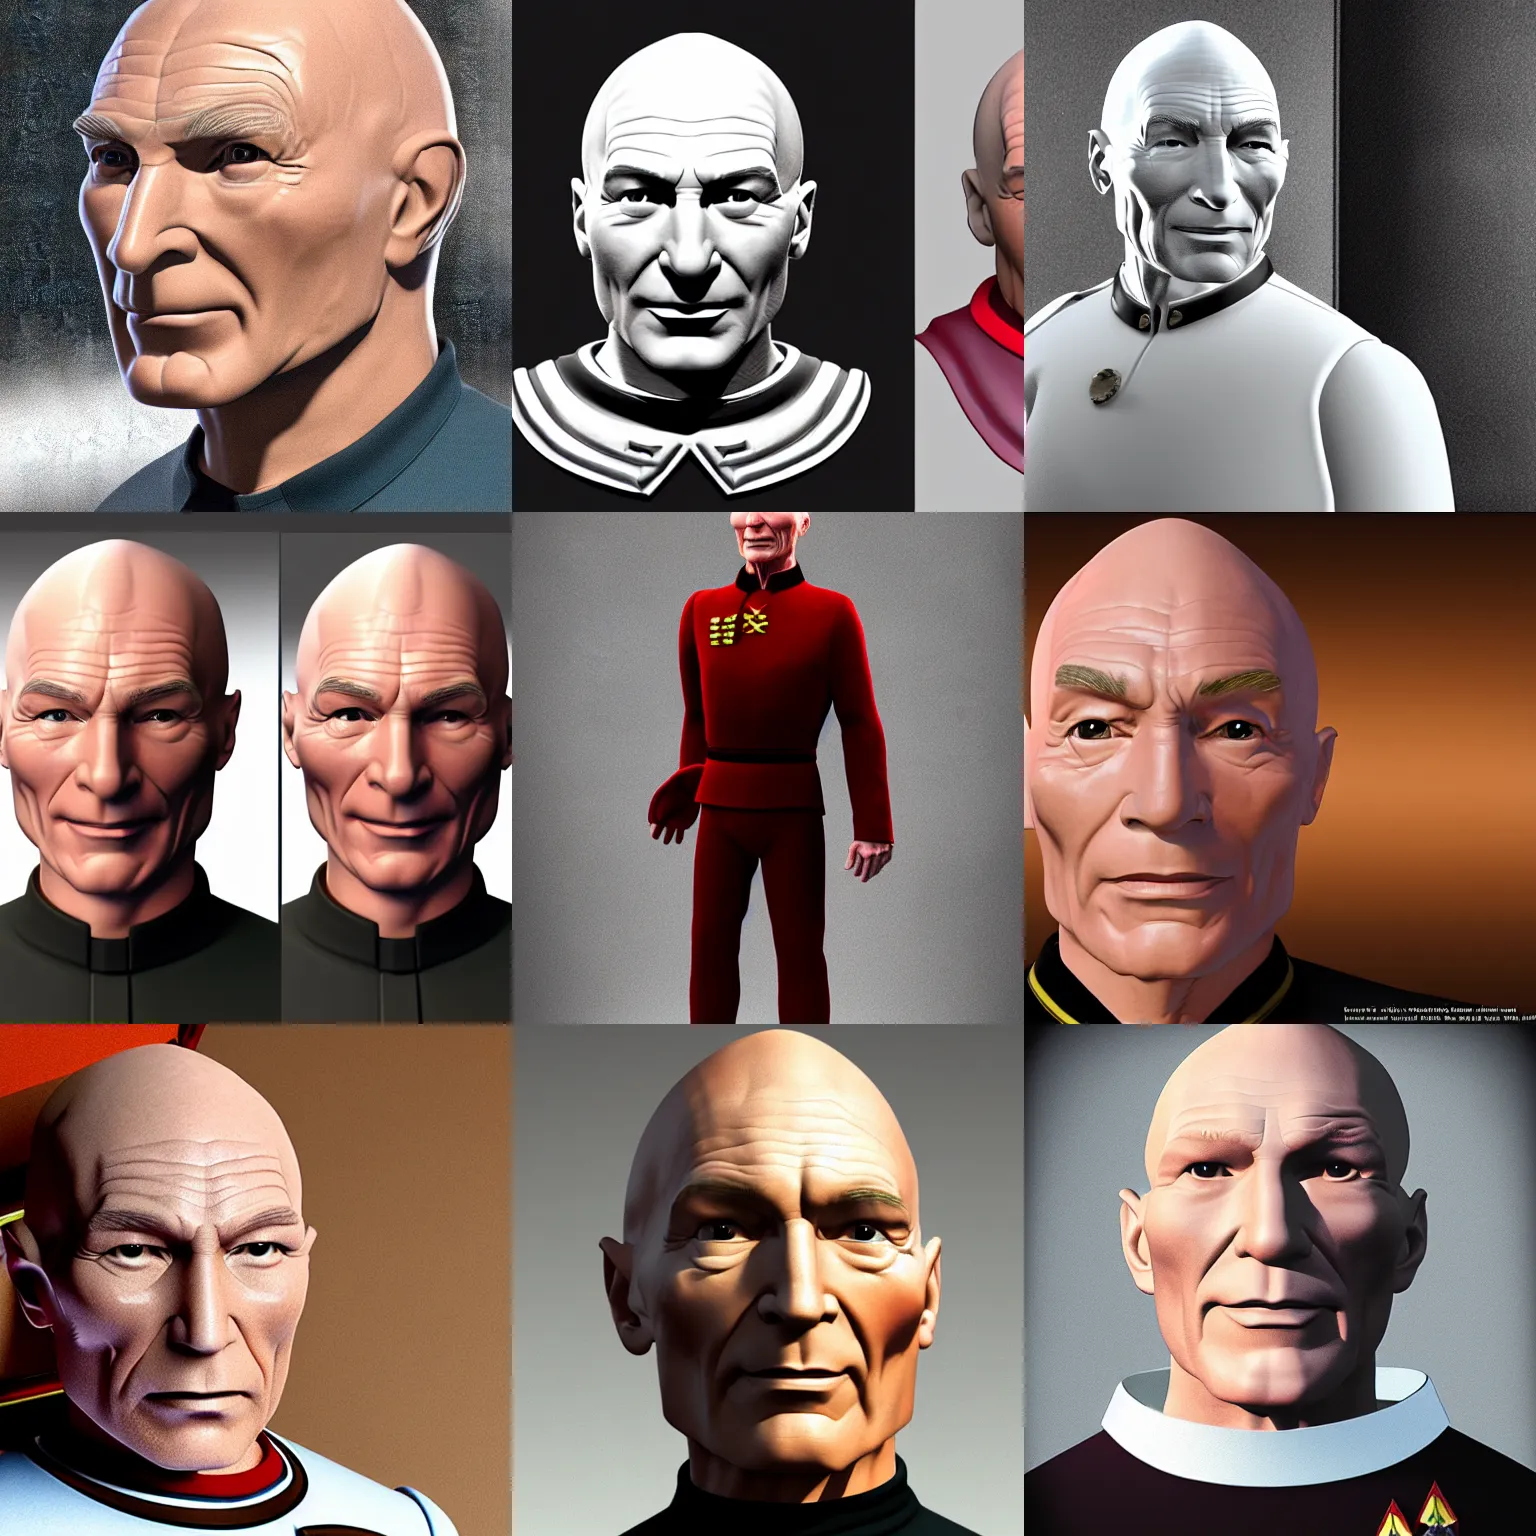 Prompt: a 3D render of Captain Picard